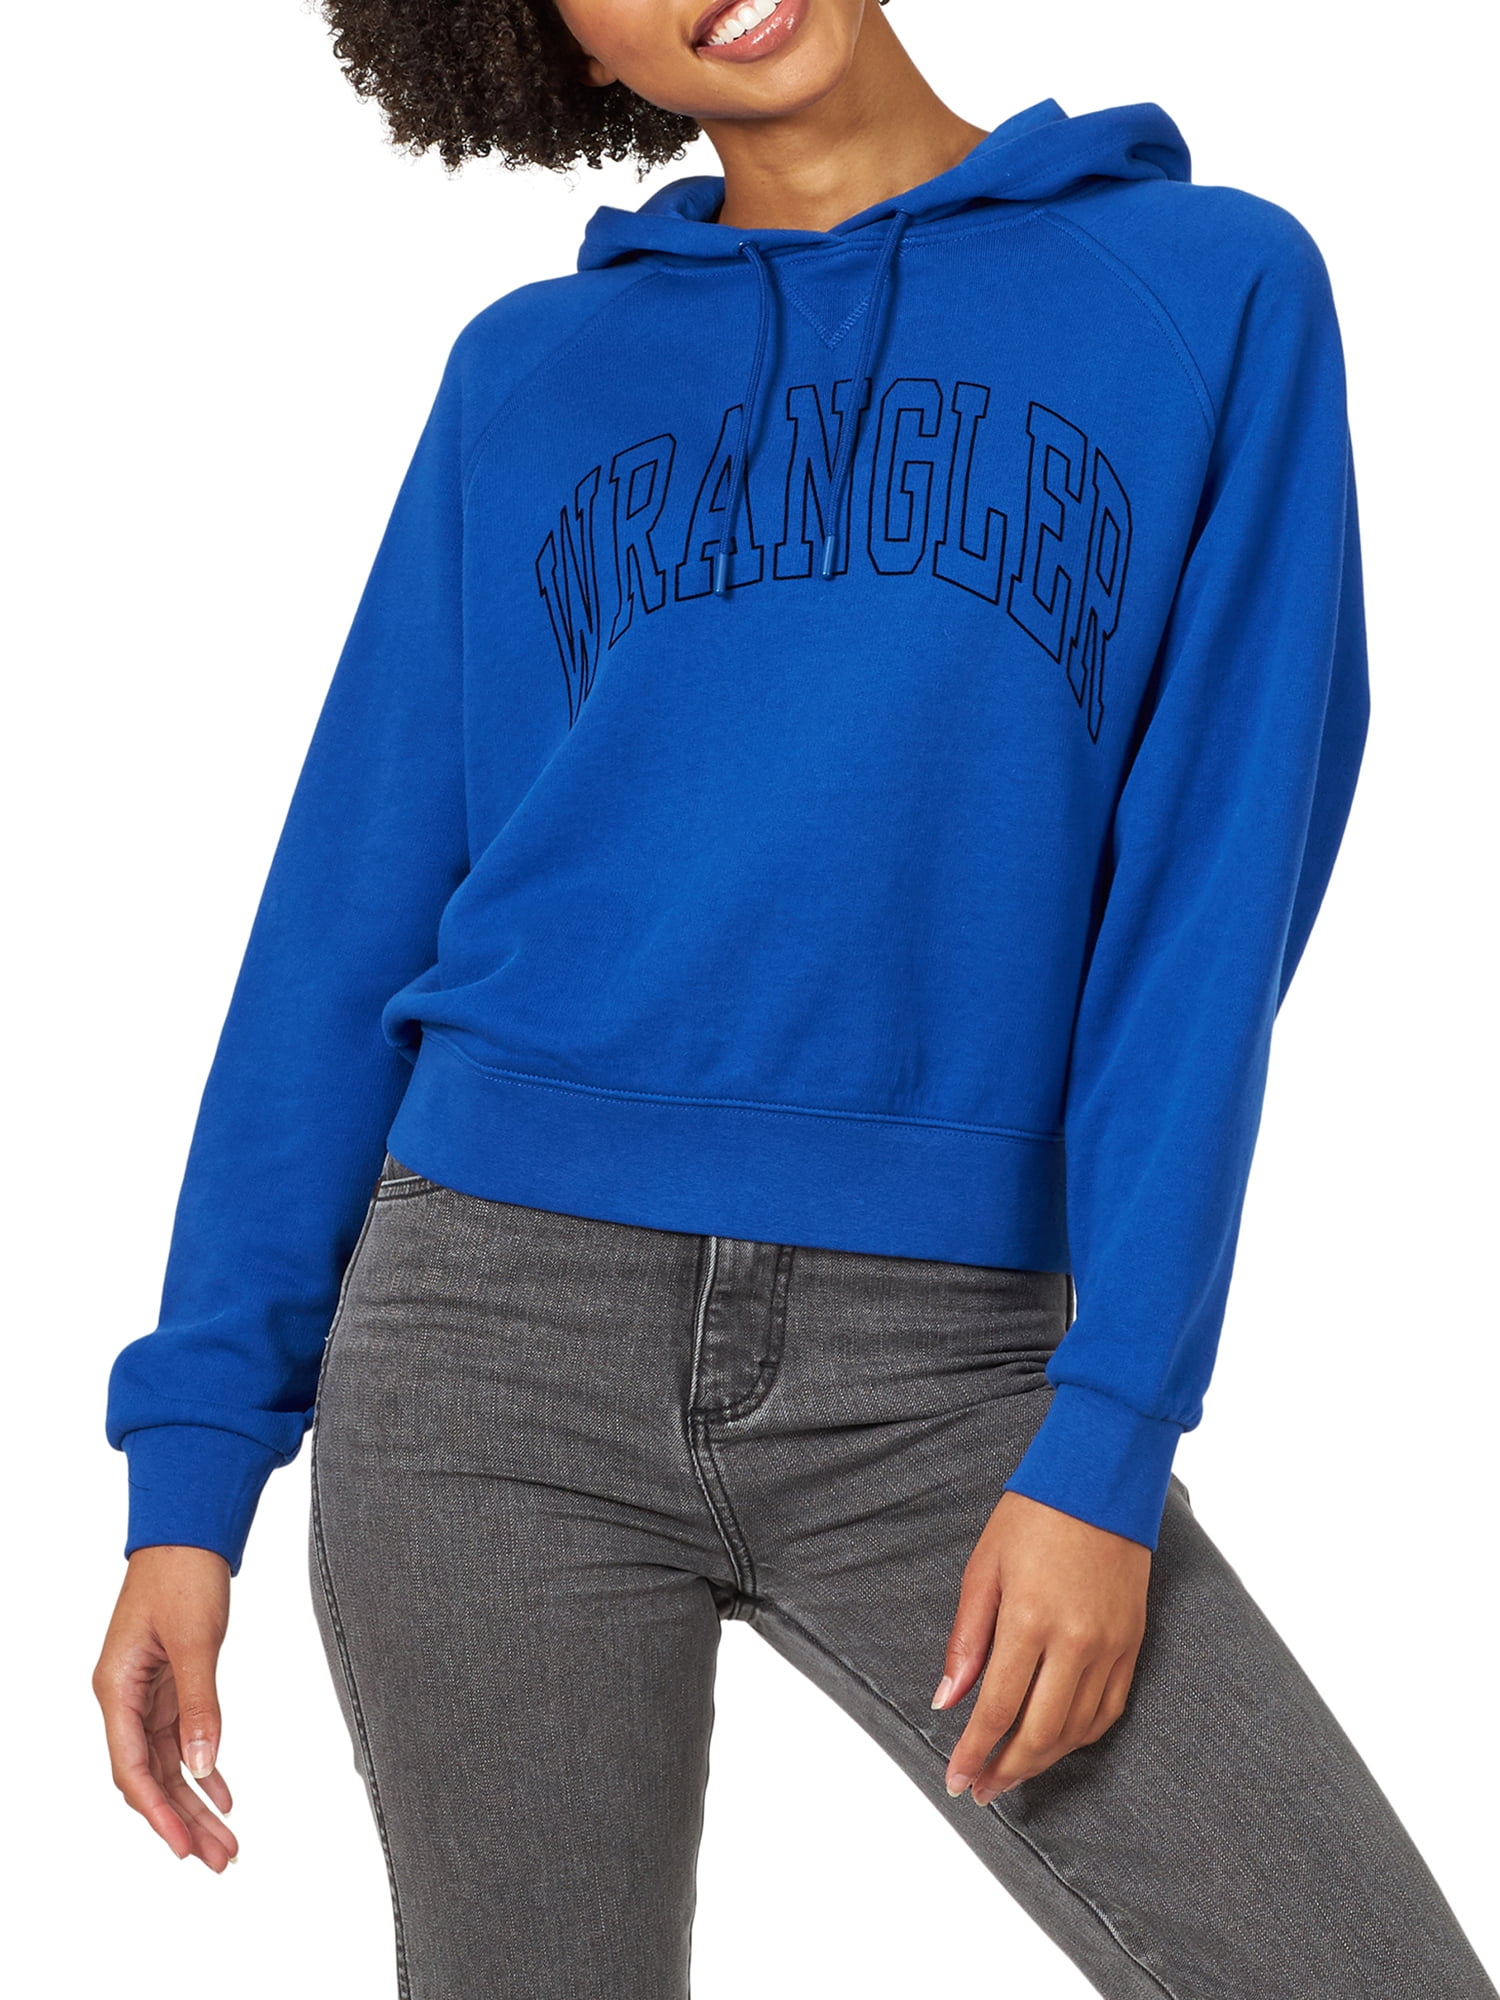 Wrangler Women's Retro Hoodie Sweatshirt 